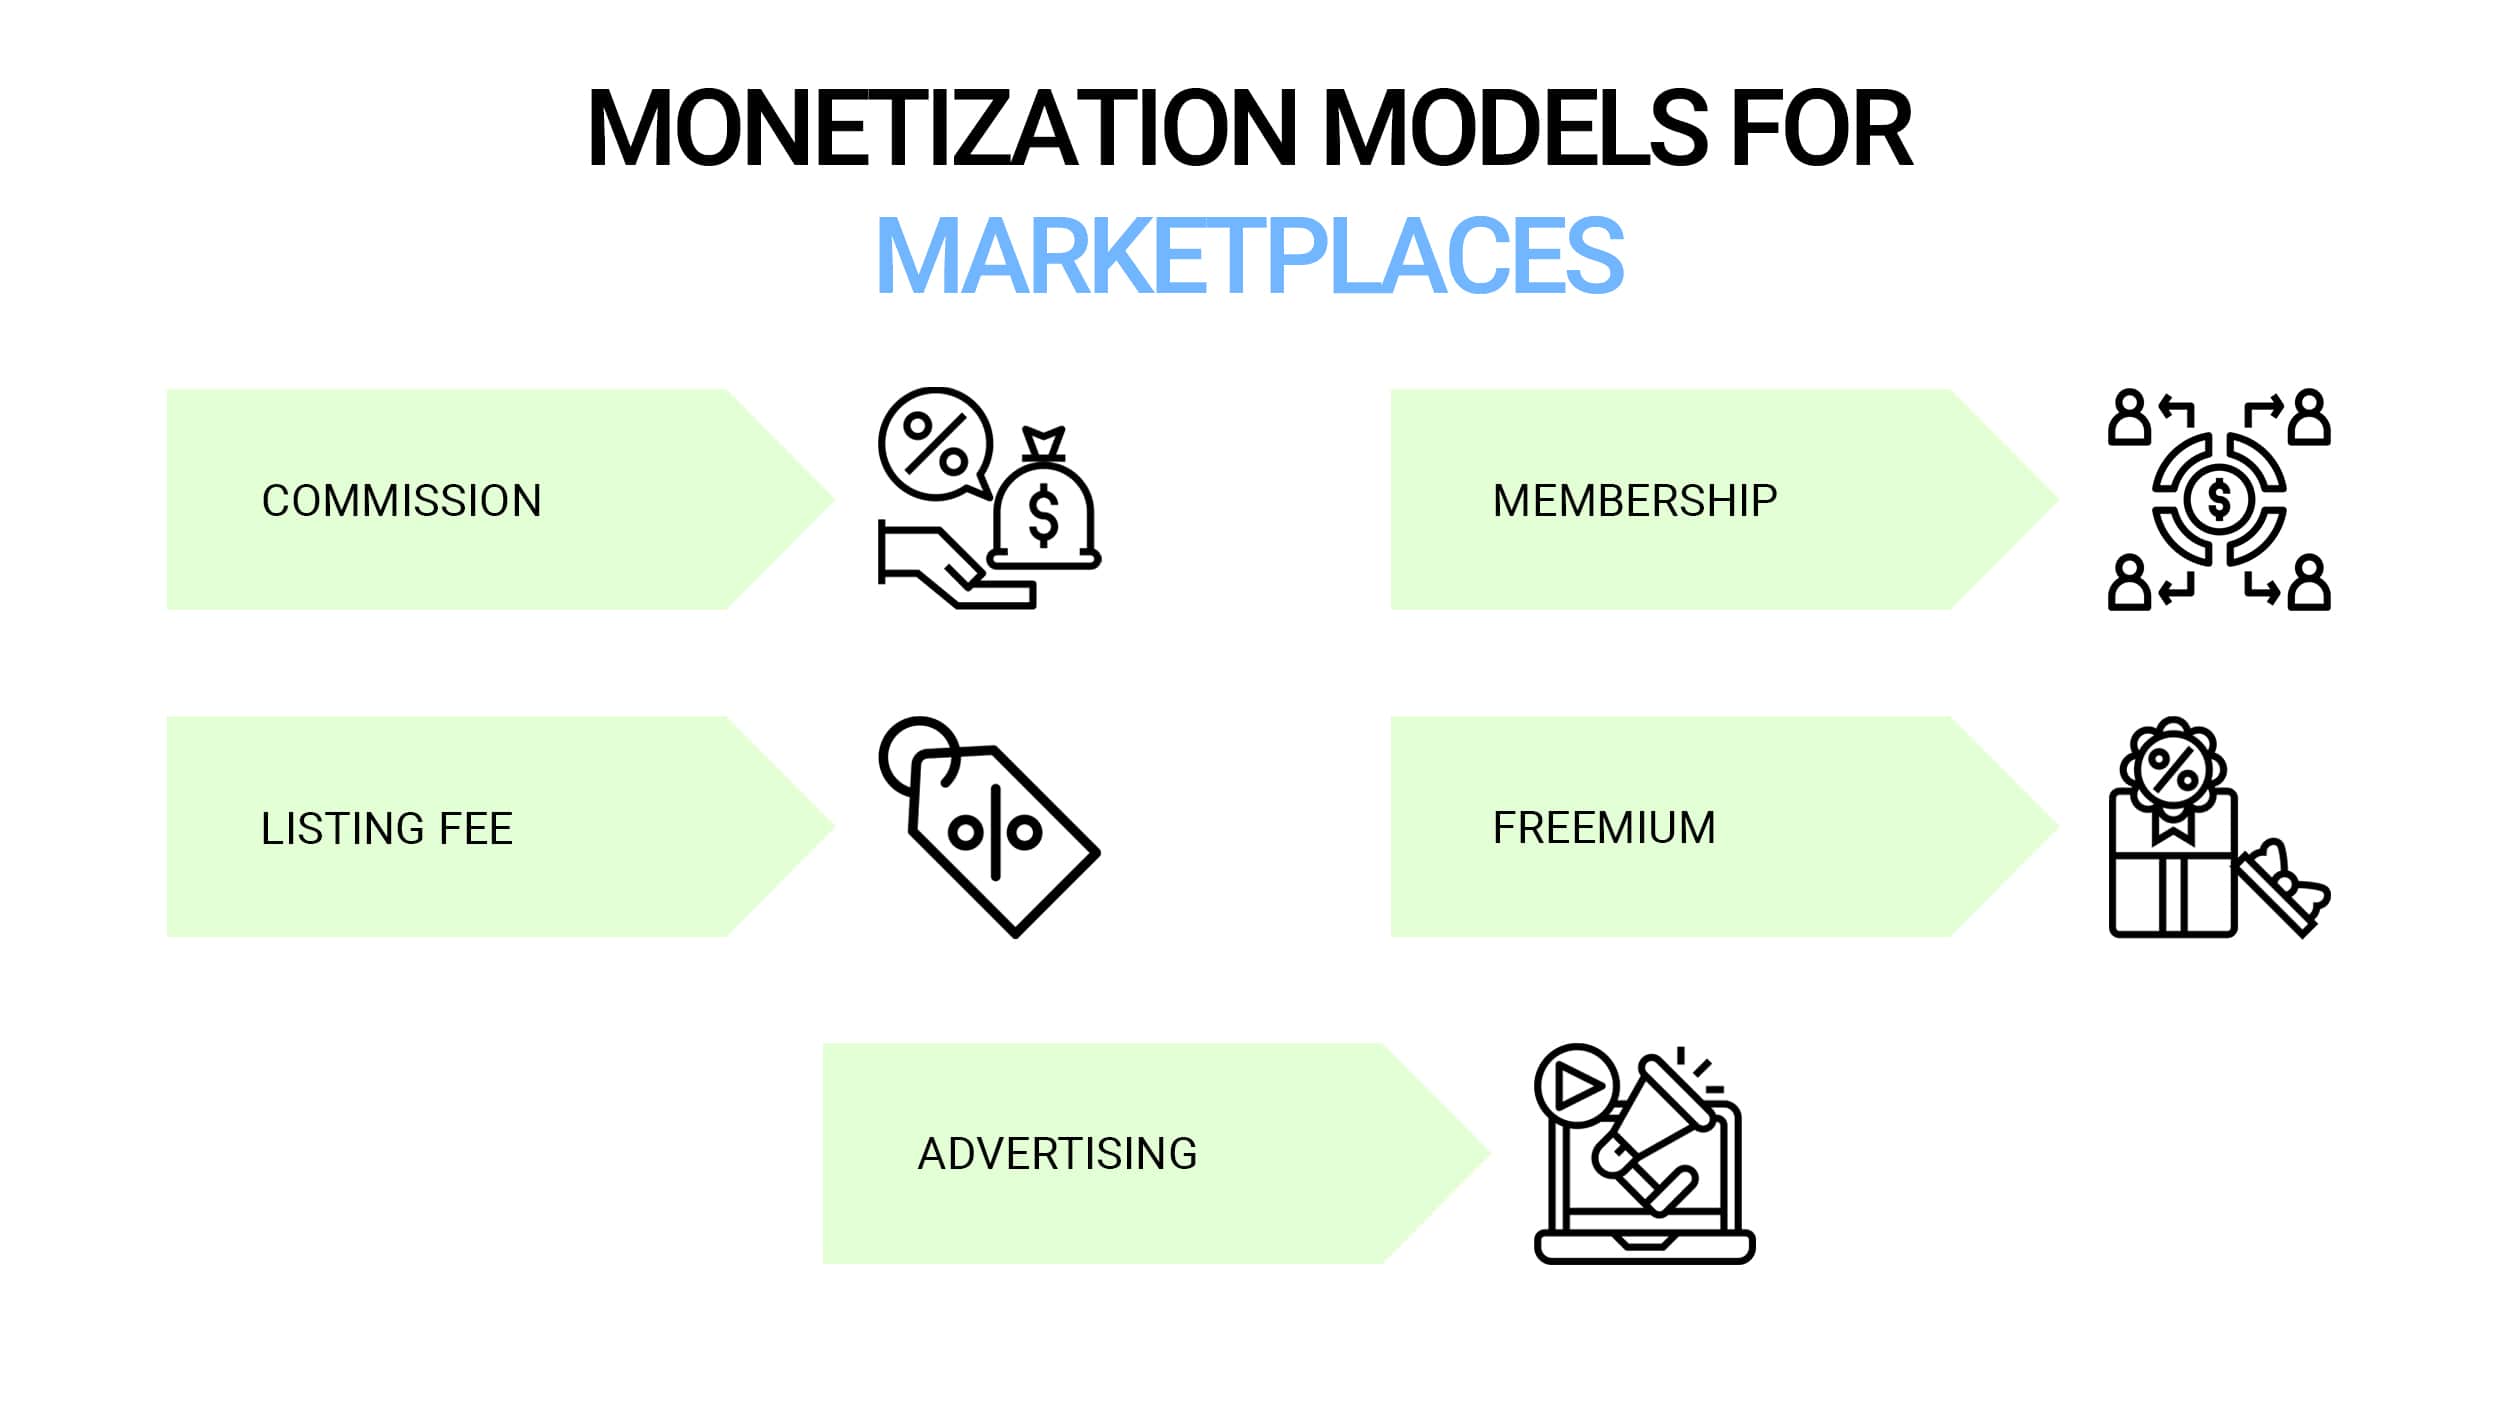 Monetization models for marketplaces